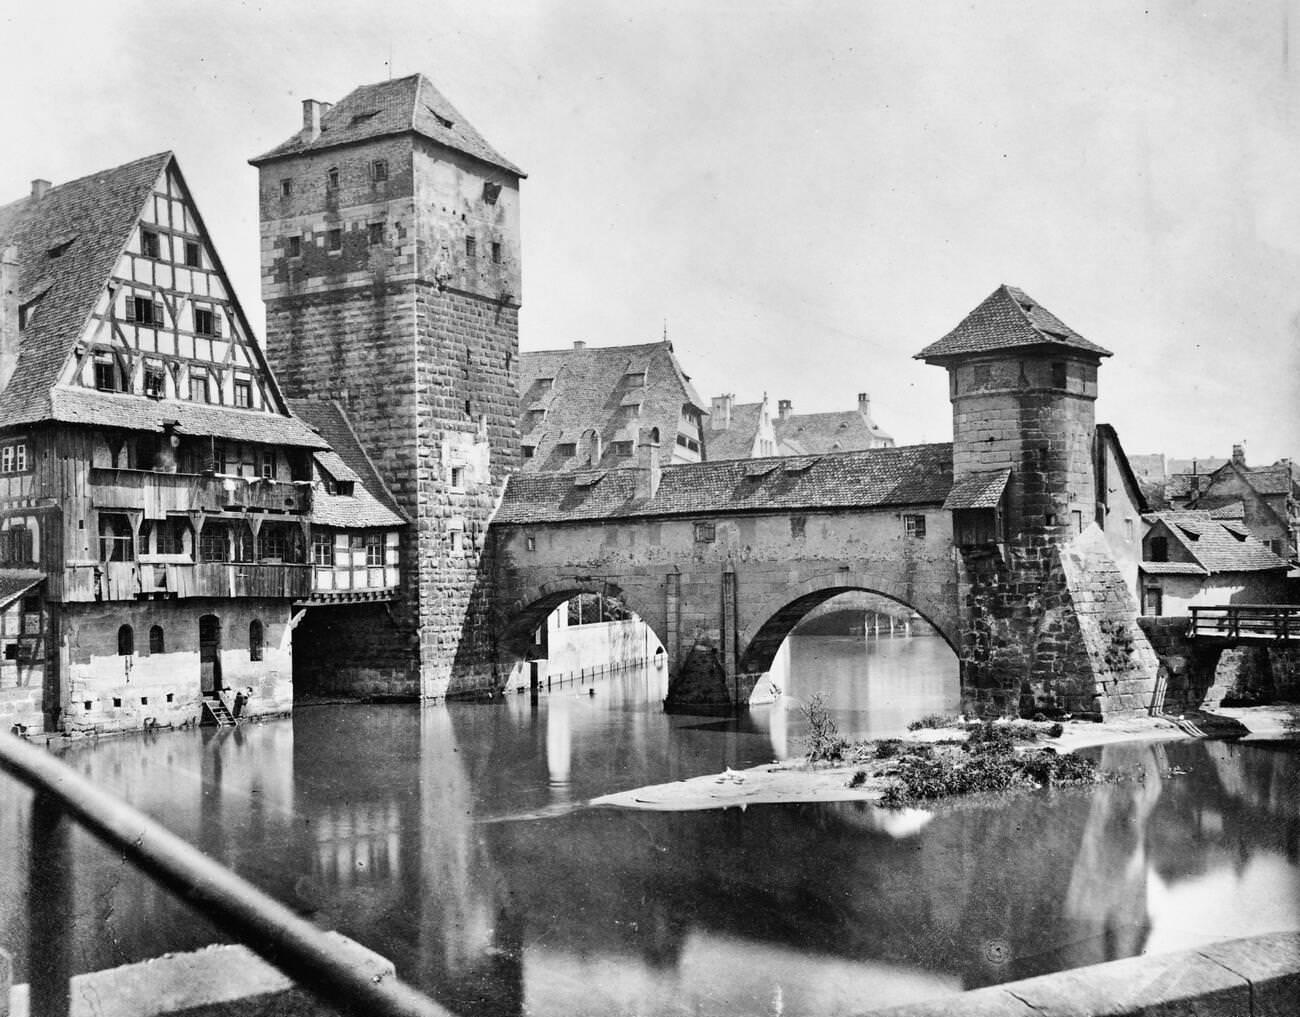 Hangman's Bridge, Nuremberg, Bavaria, Germany, 1880.